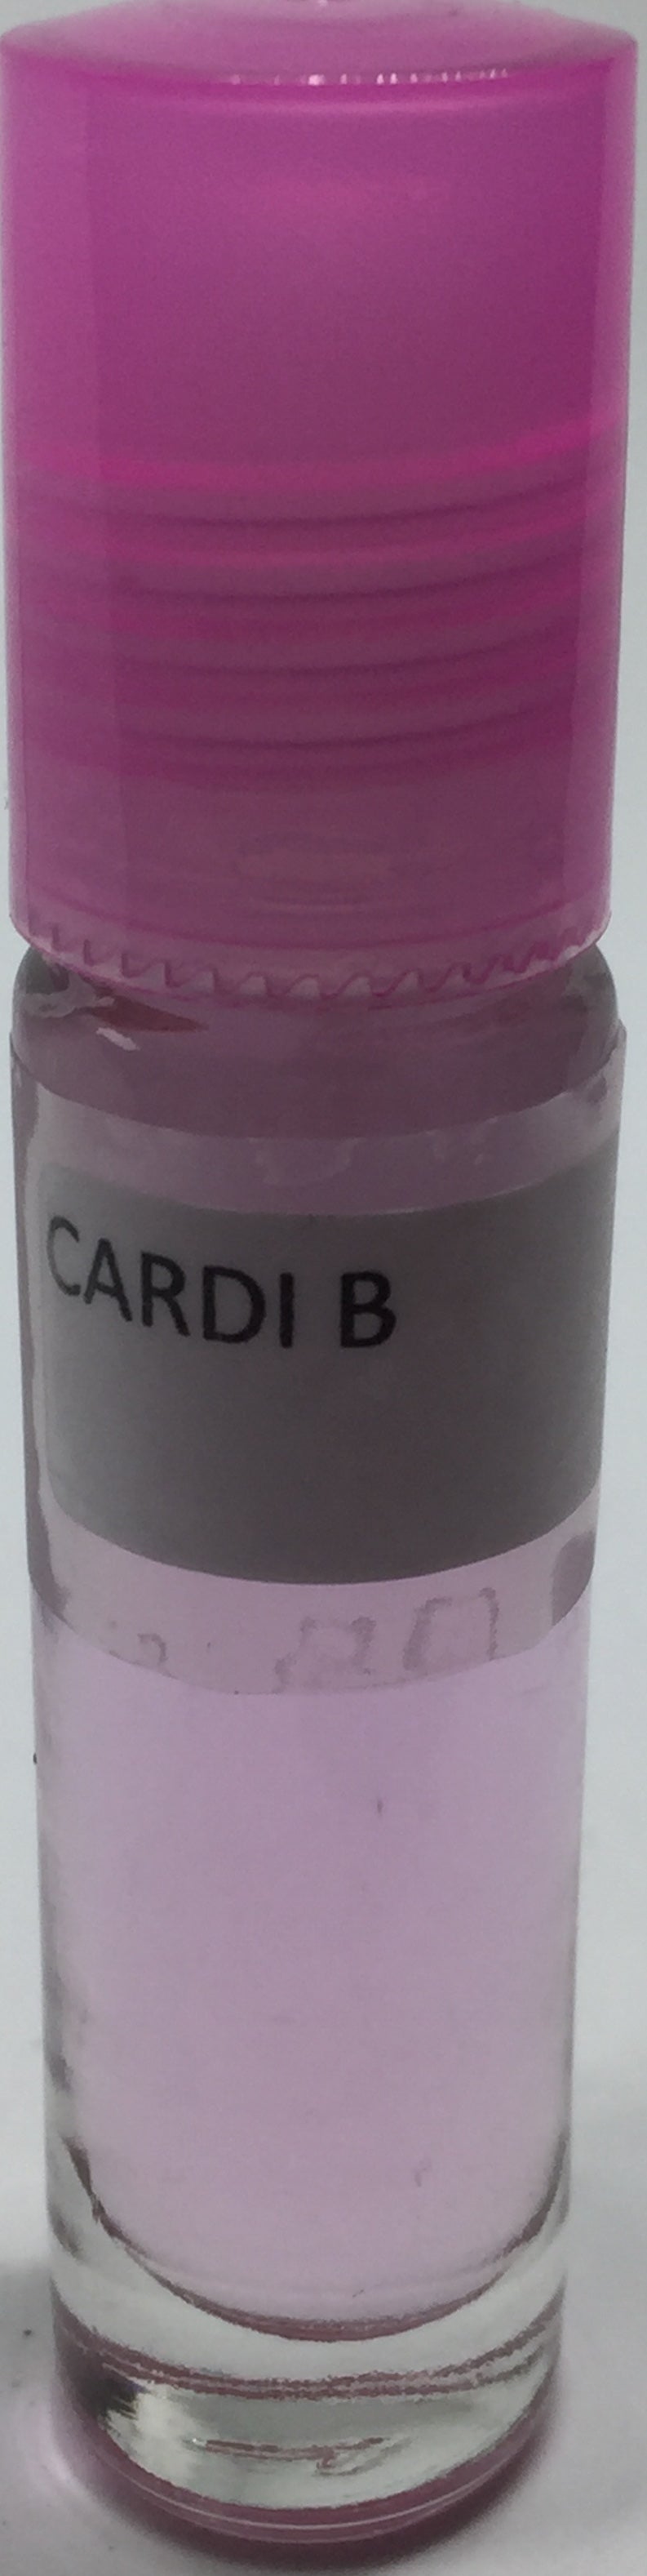 Cardi B:Fragrance(Purfume)Body Oil Women